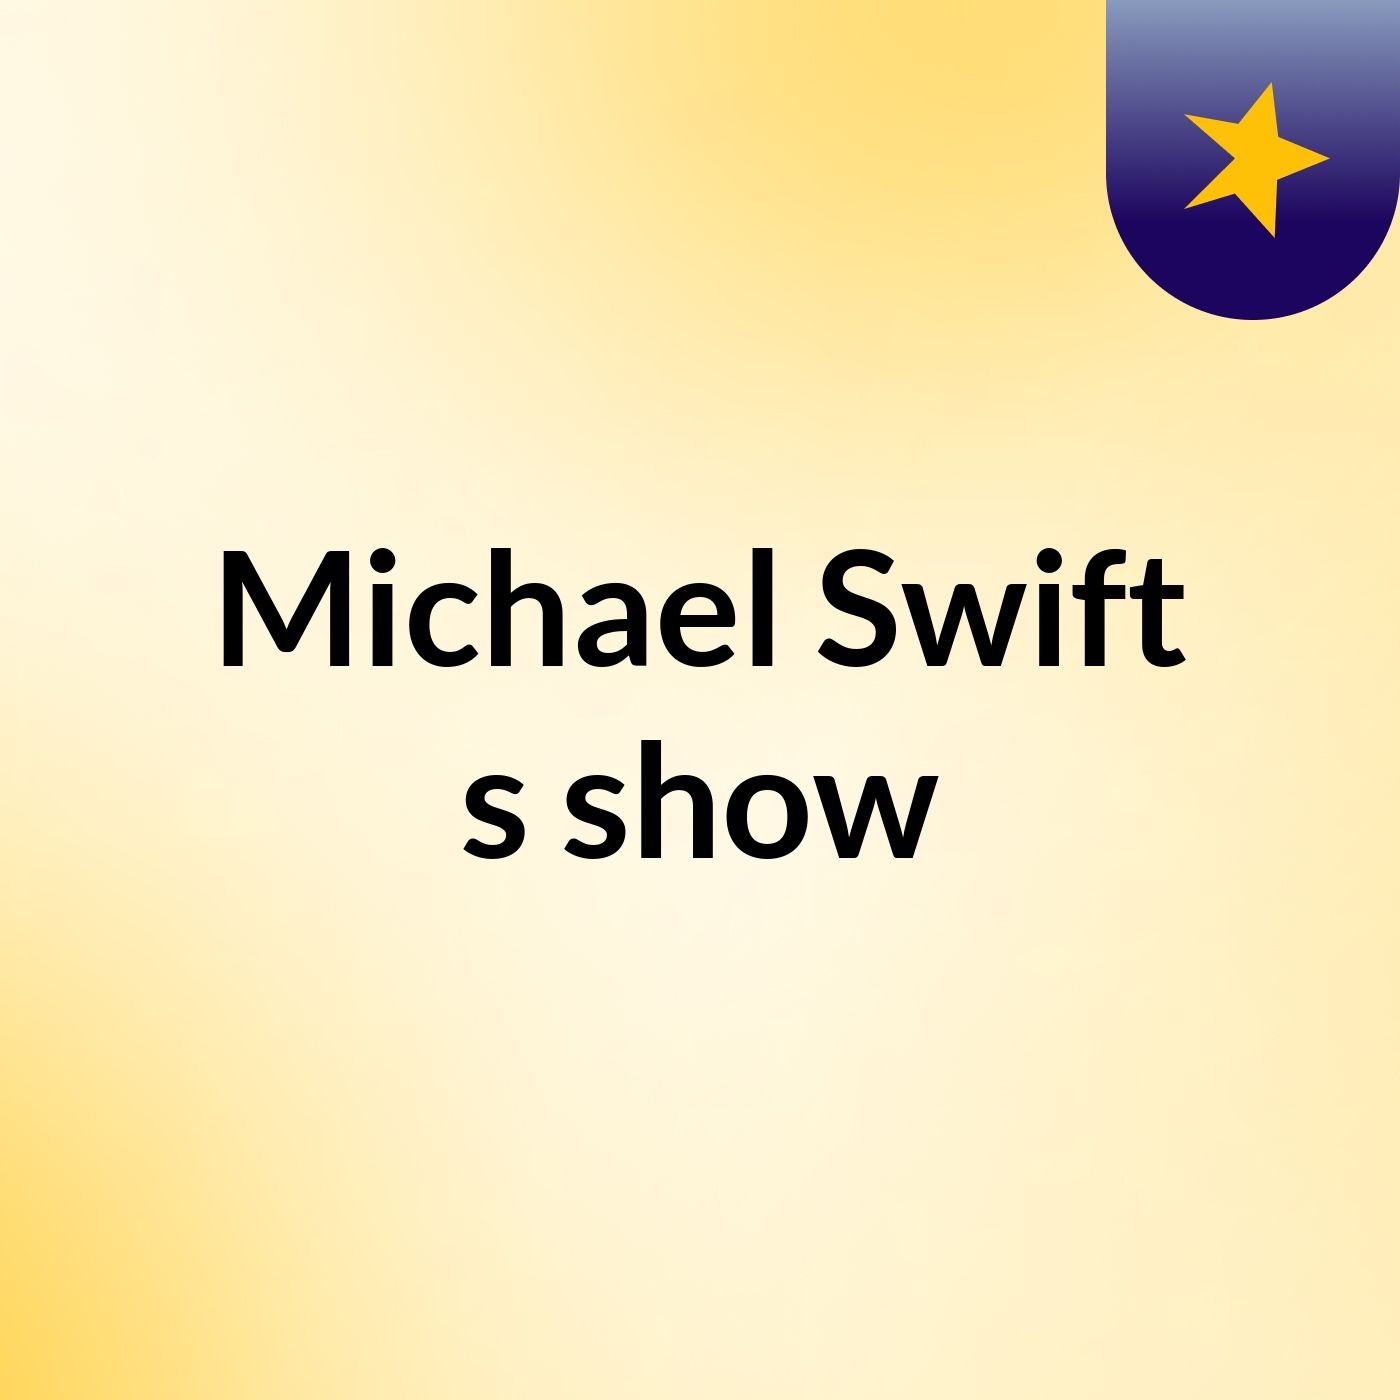 Michael Swift's show